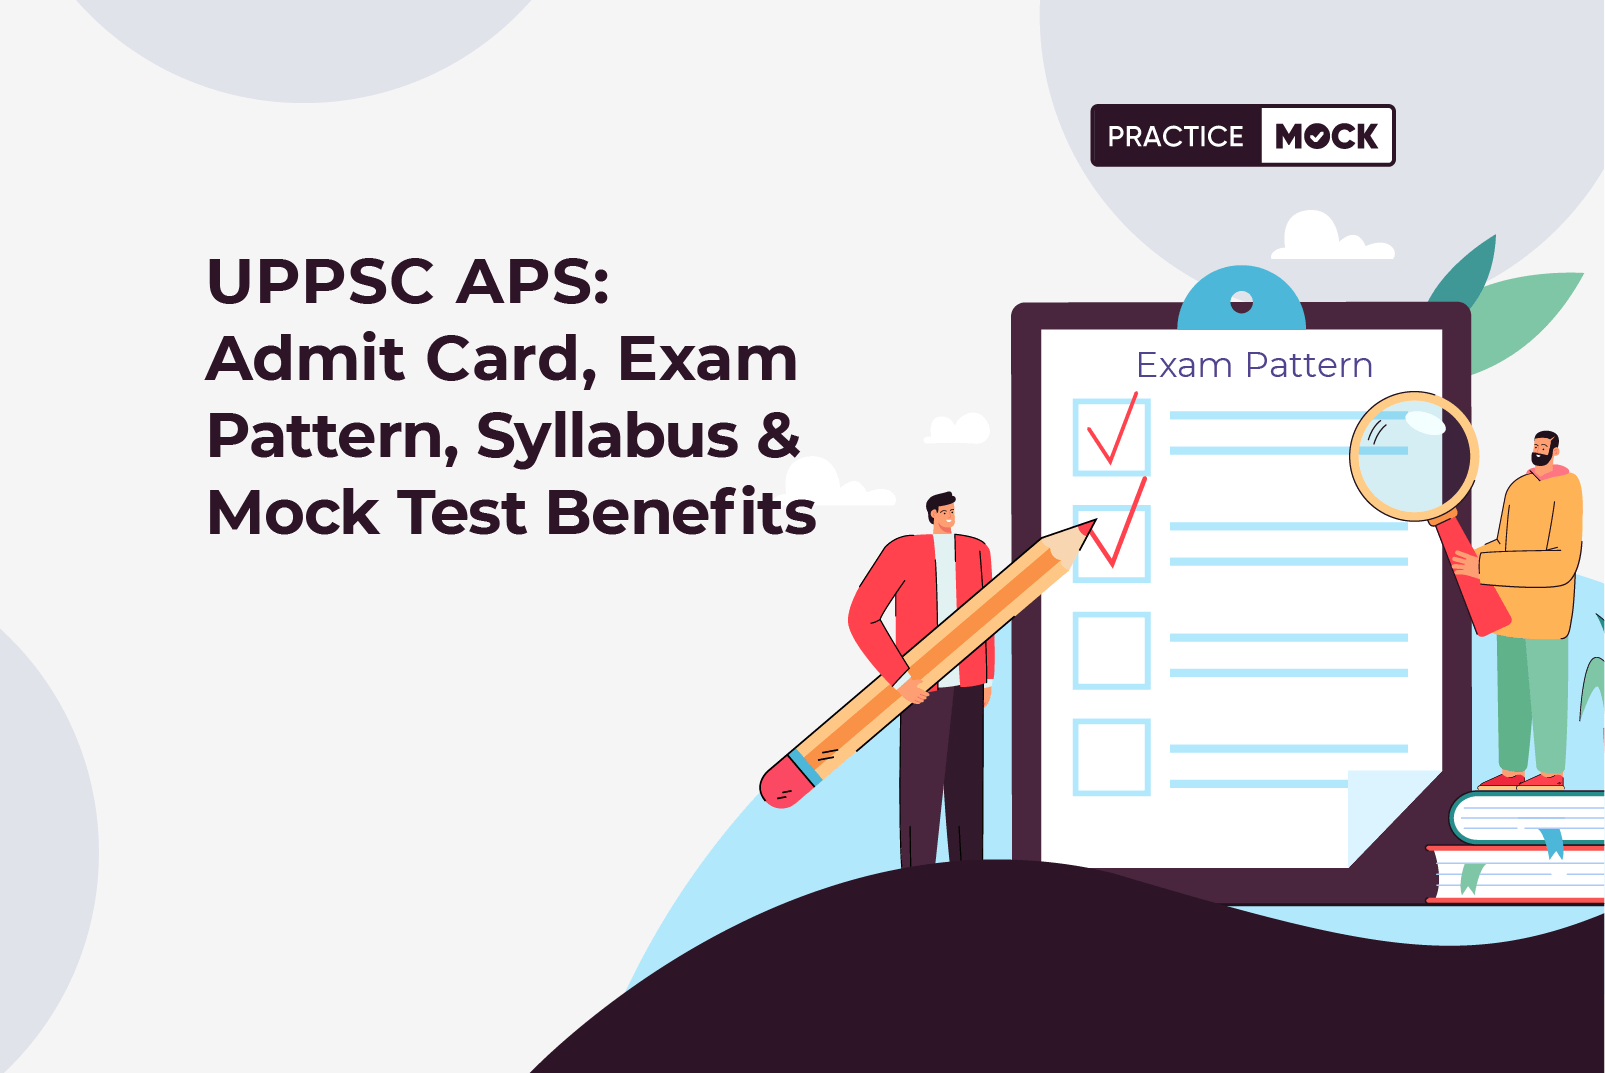 UPPSC APS: Admit Card, Exam Pattern, Syllabus & Mock Test Benefits